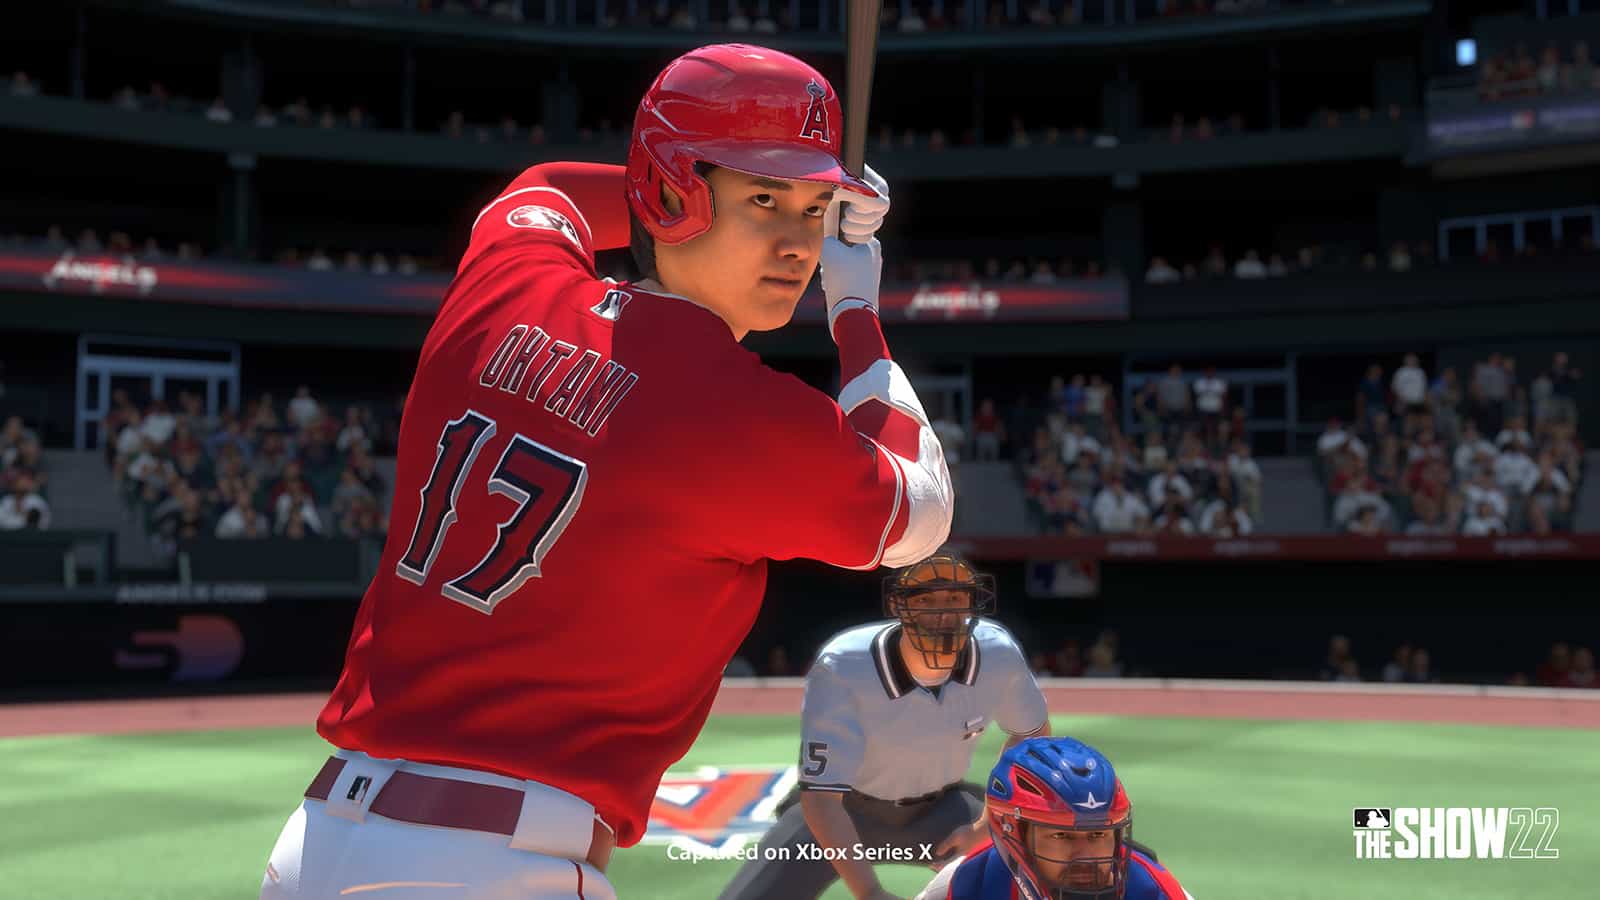 MLB The Show 22 screenshot showing a player preparing to swing a baseball bat